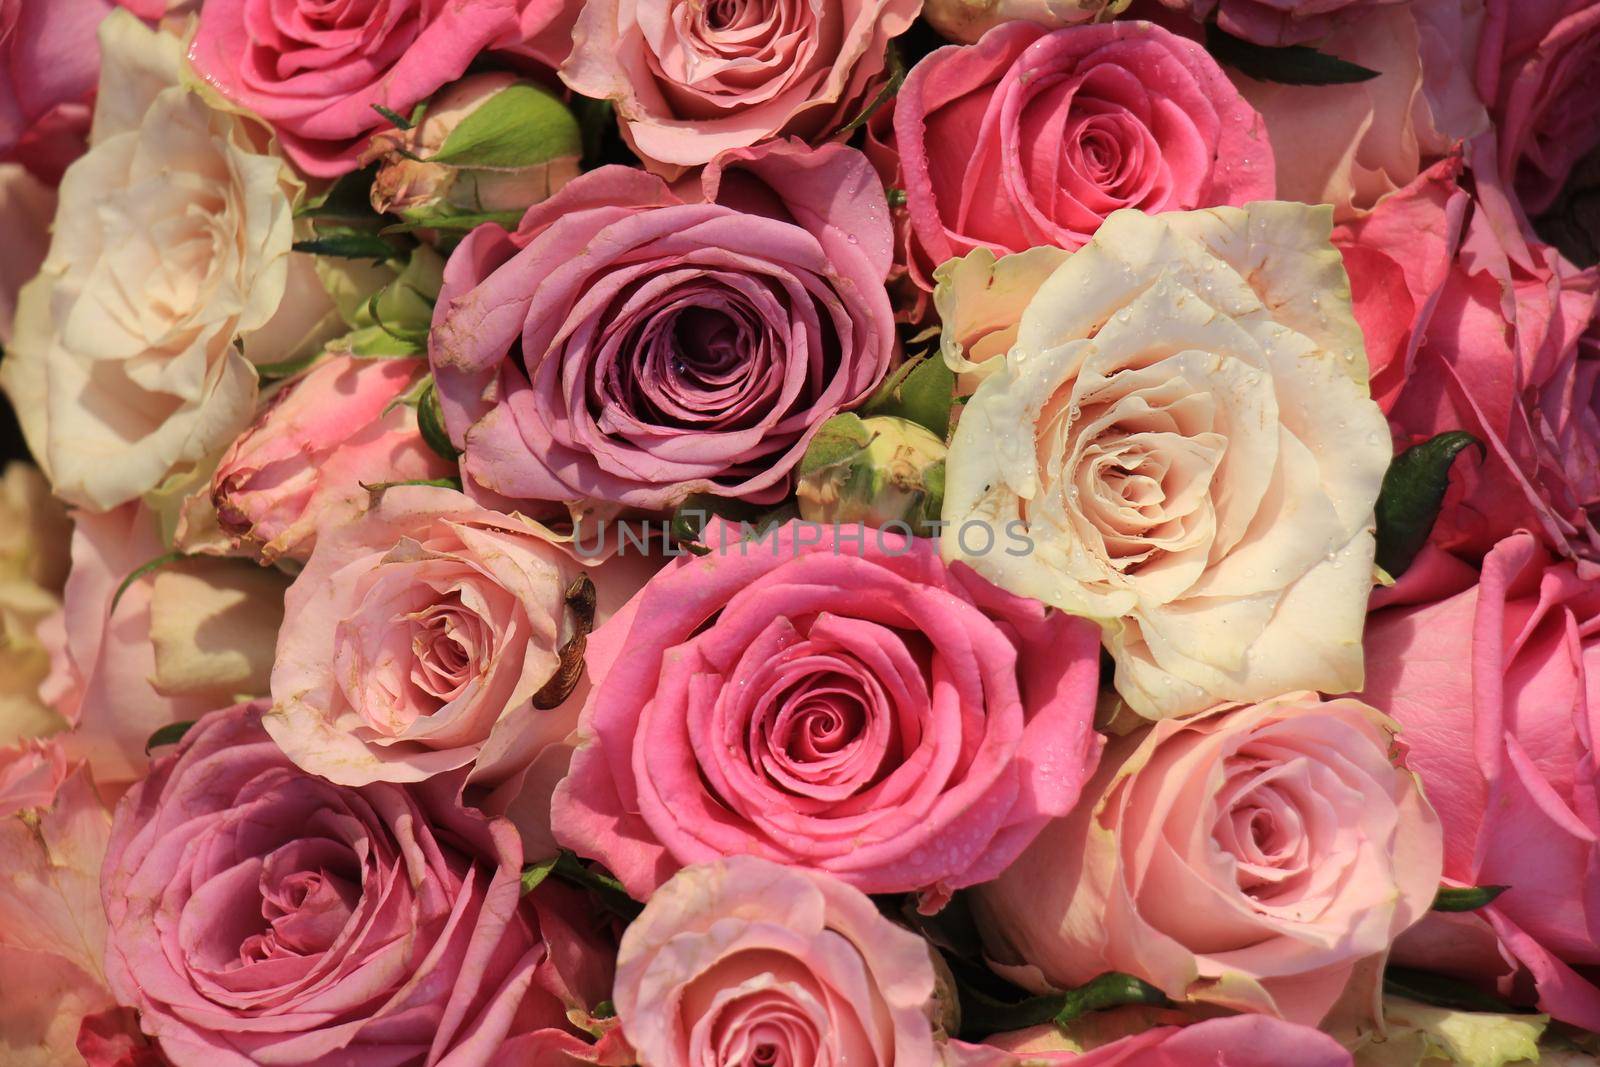 Mixed pink roses by studioportosabbia